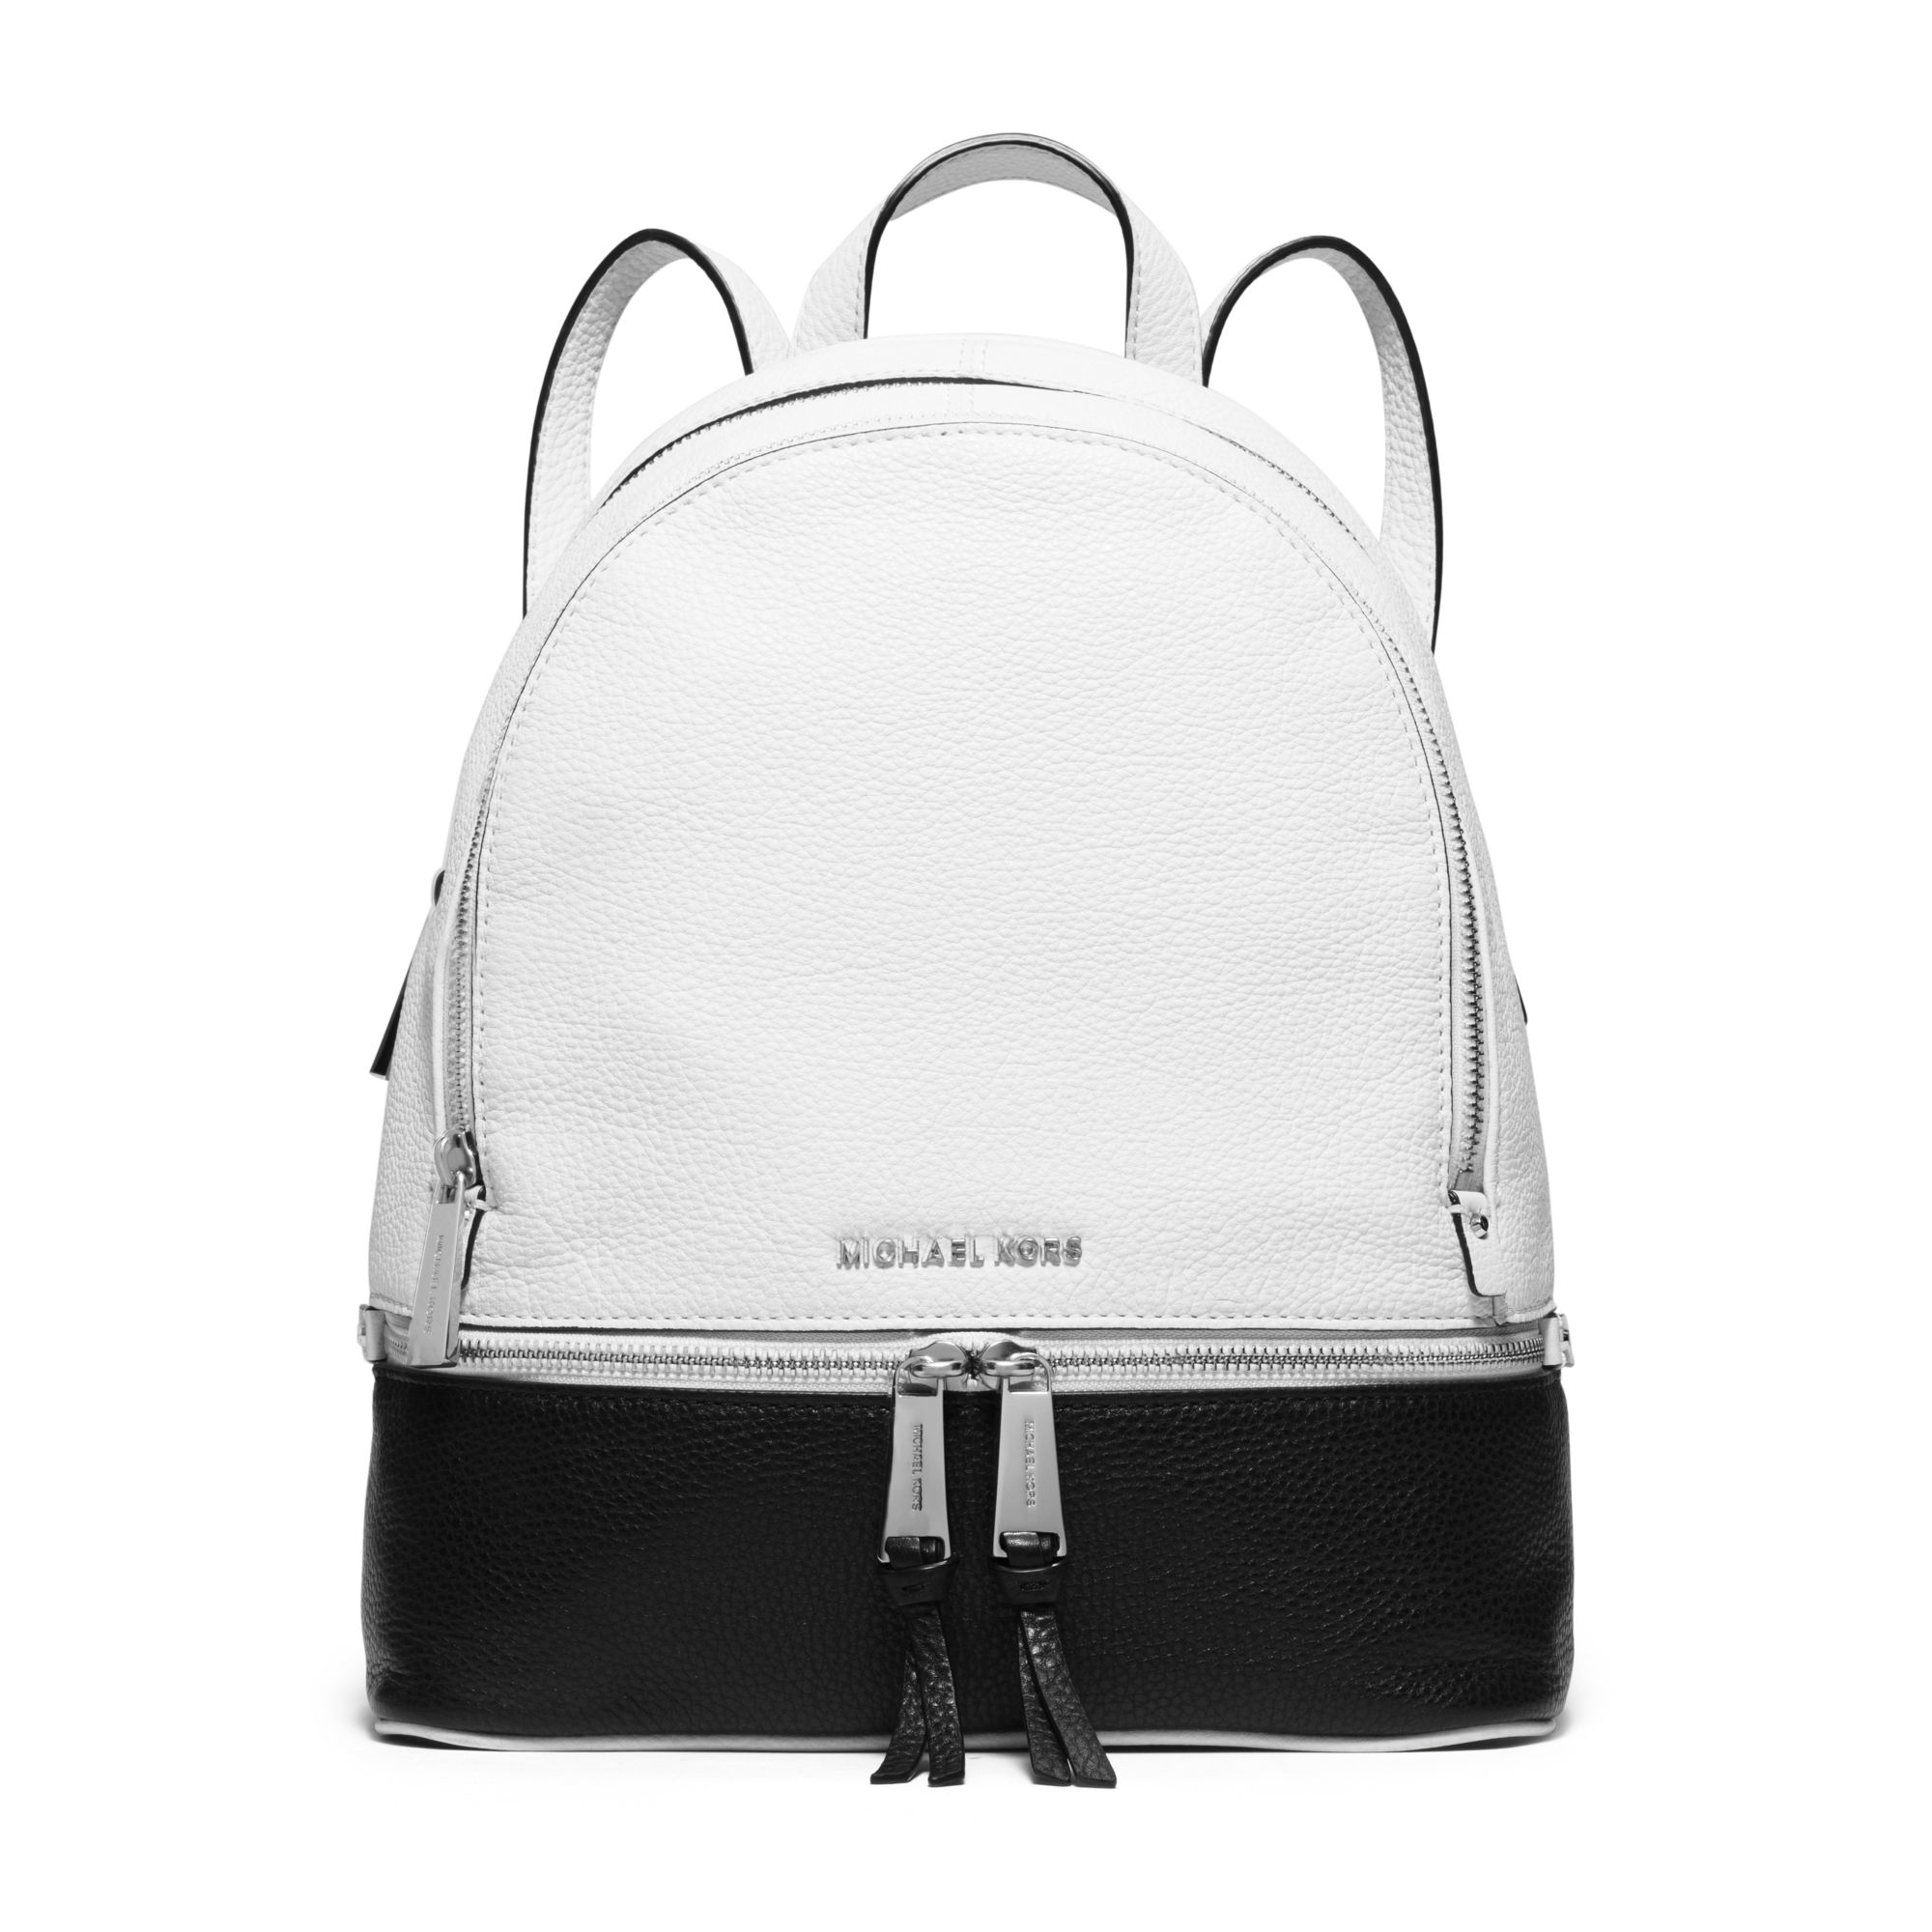 Lyst - Michael Kors Rhea Medium Color-block Leather Backpack in Black